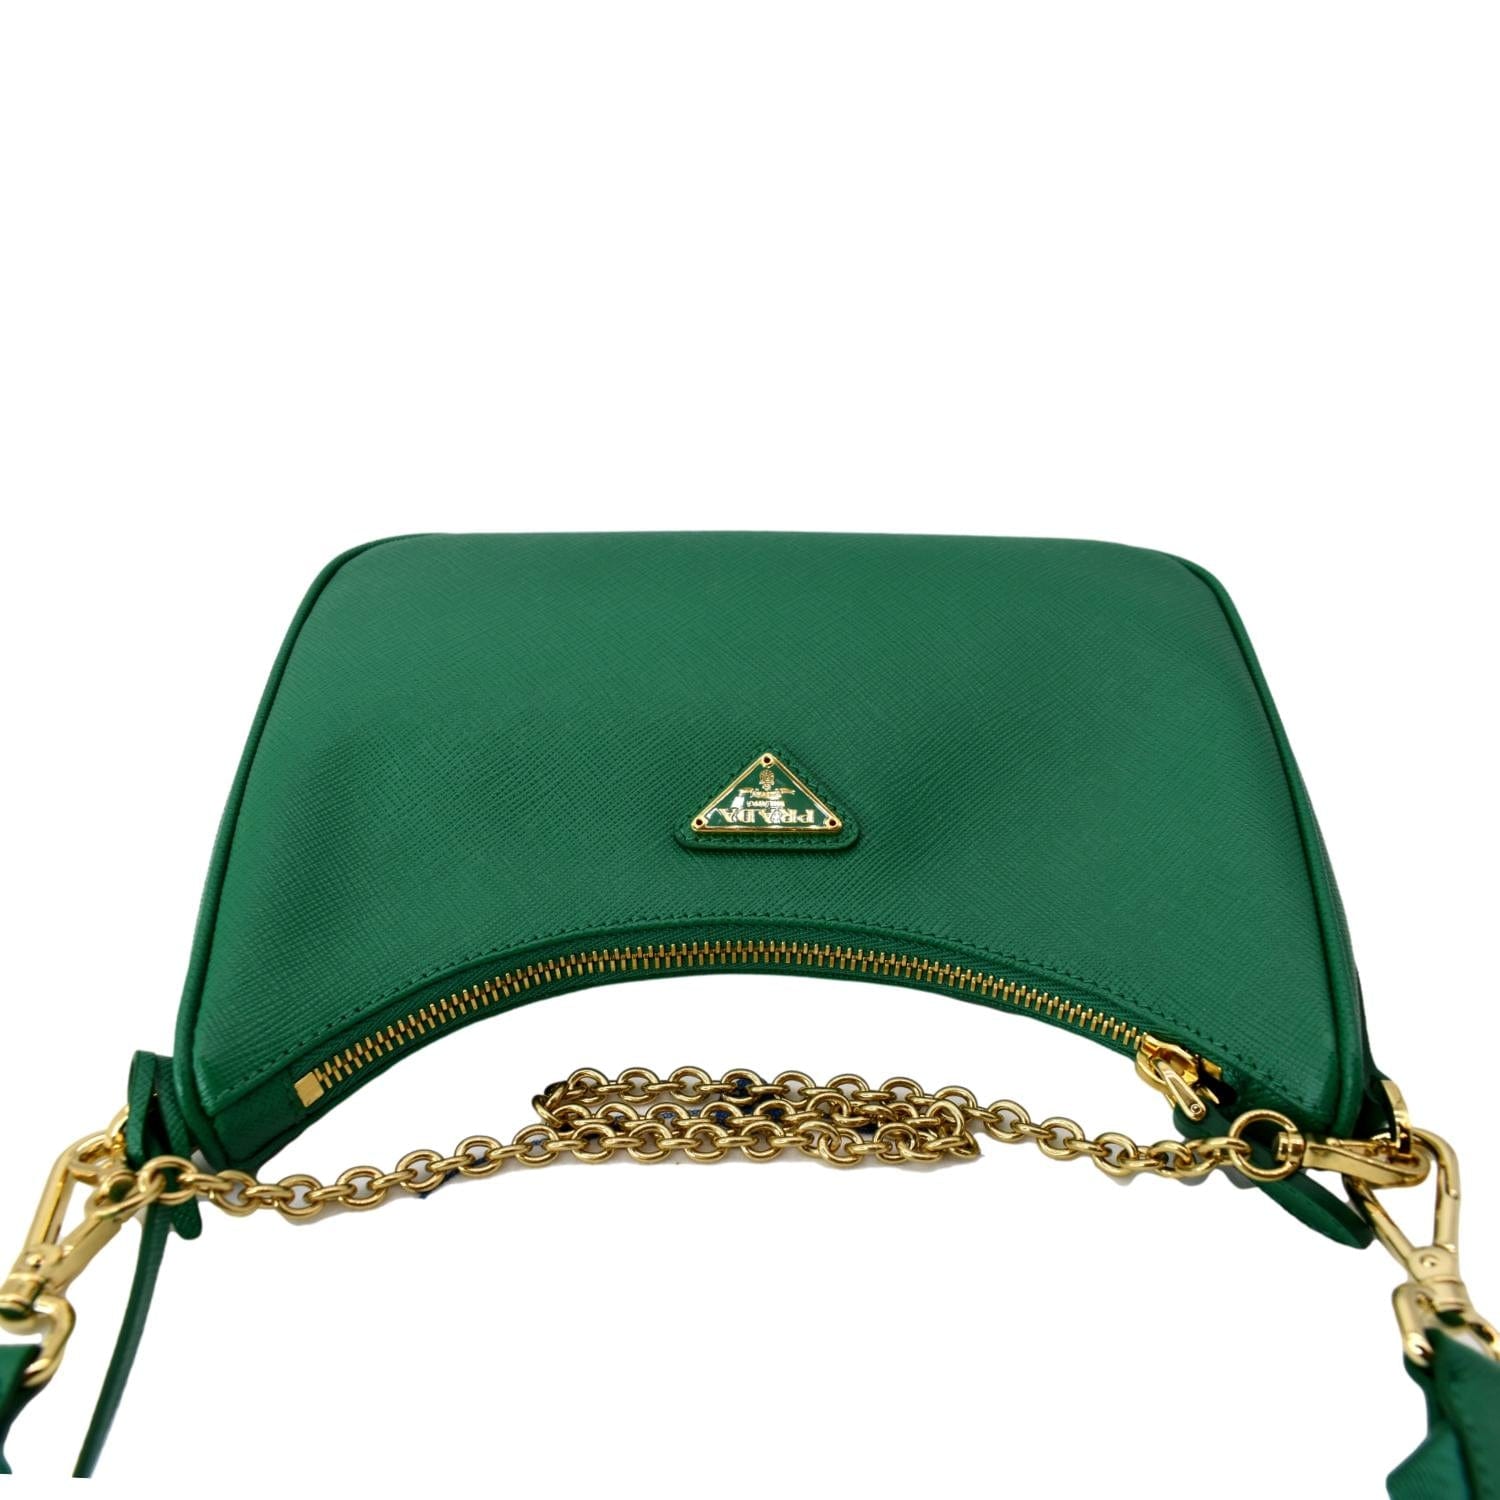 GREEN Leather Prada Handbag GIRLS, For Casual Wear at Rs 2400 in New Delhi